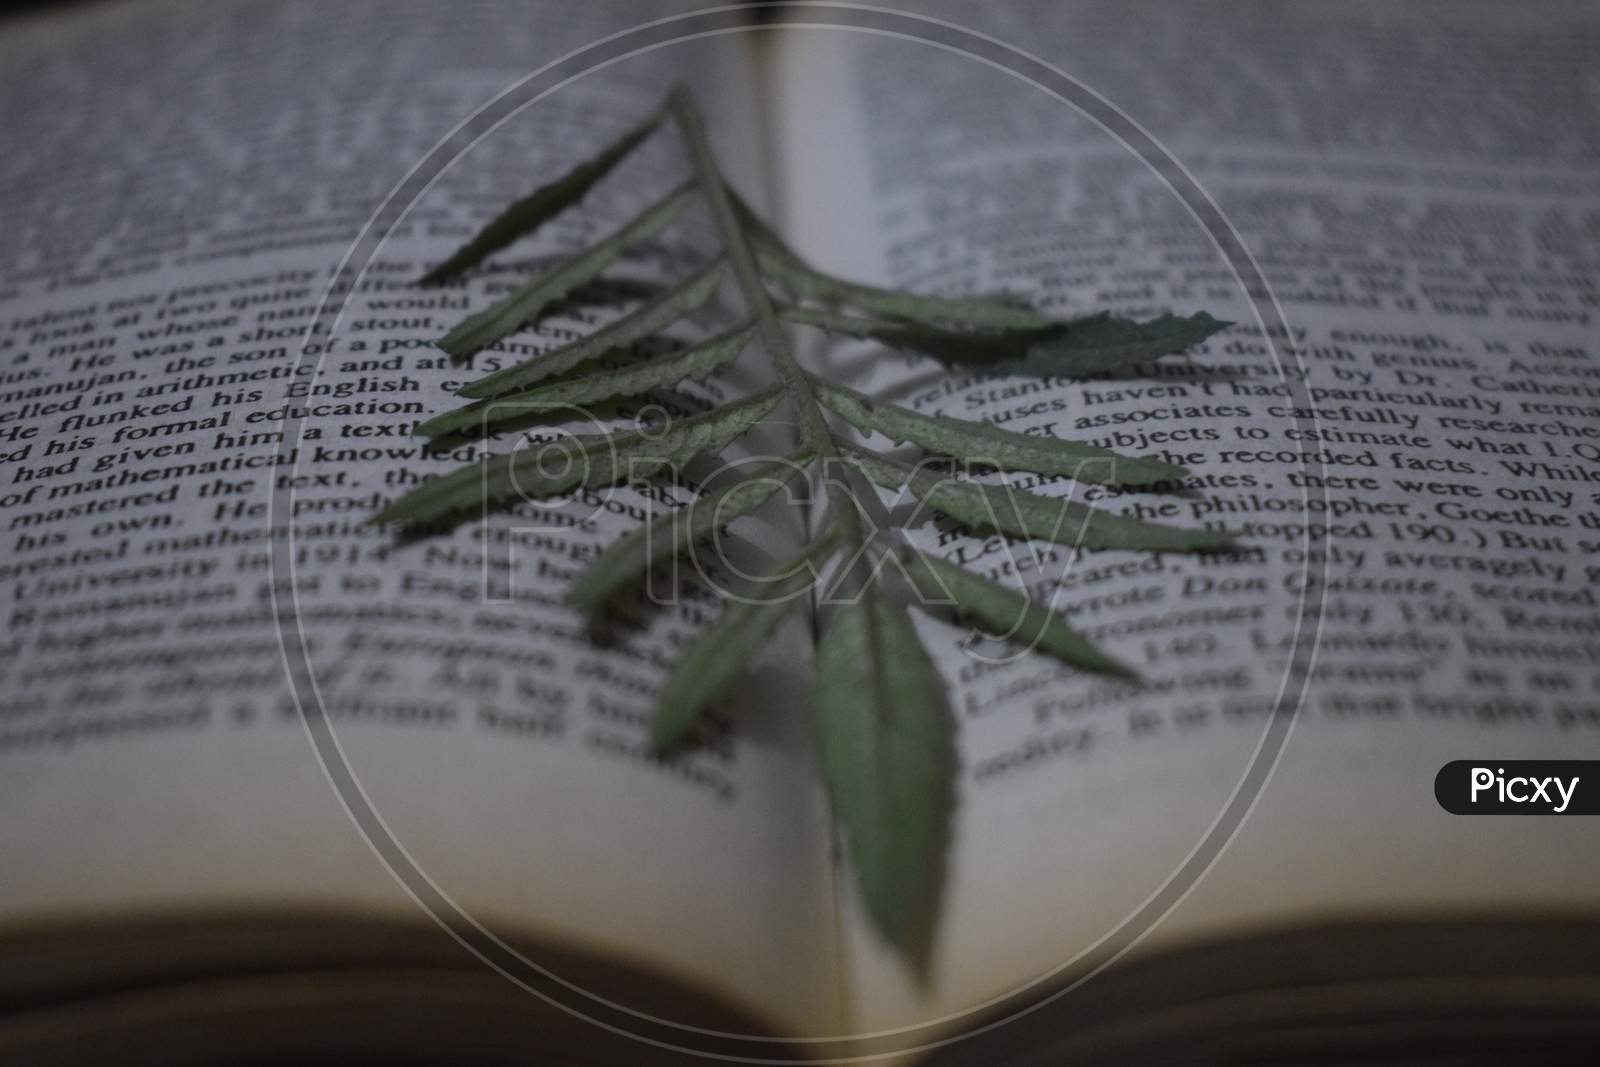 satbargha leaves on books leaves of plant